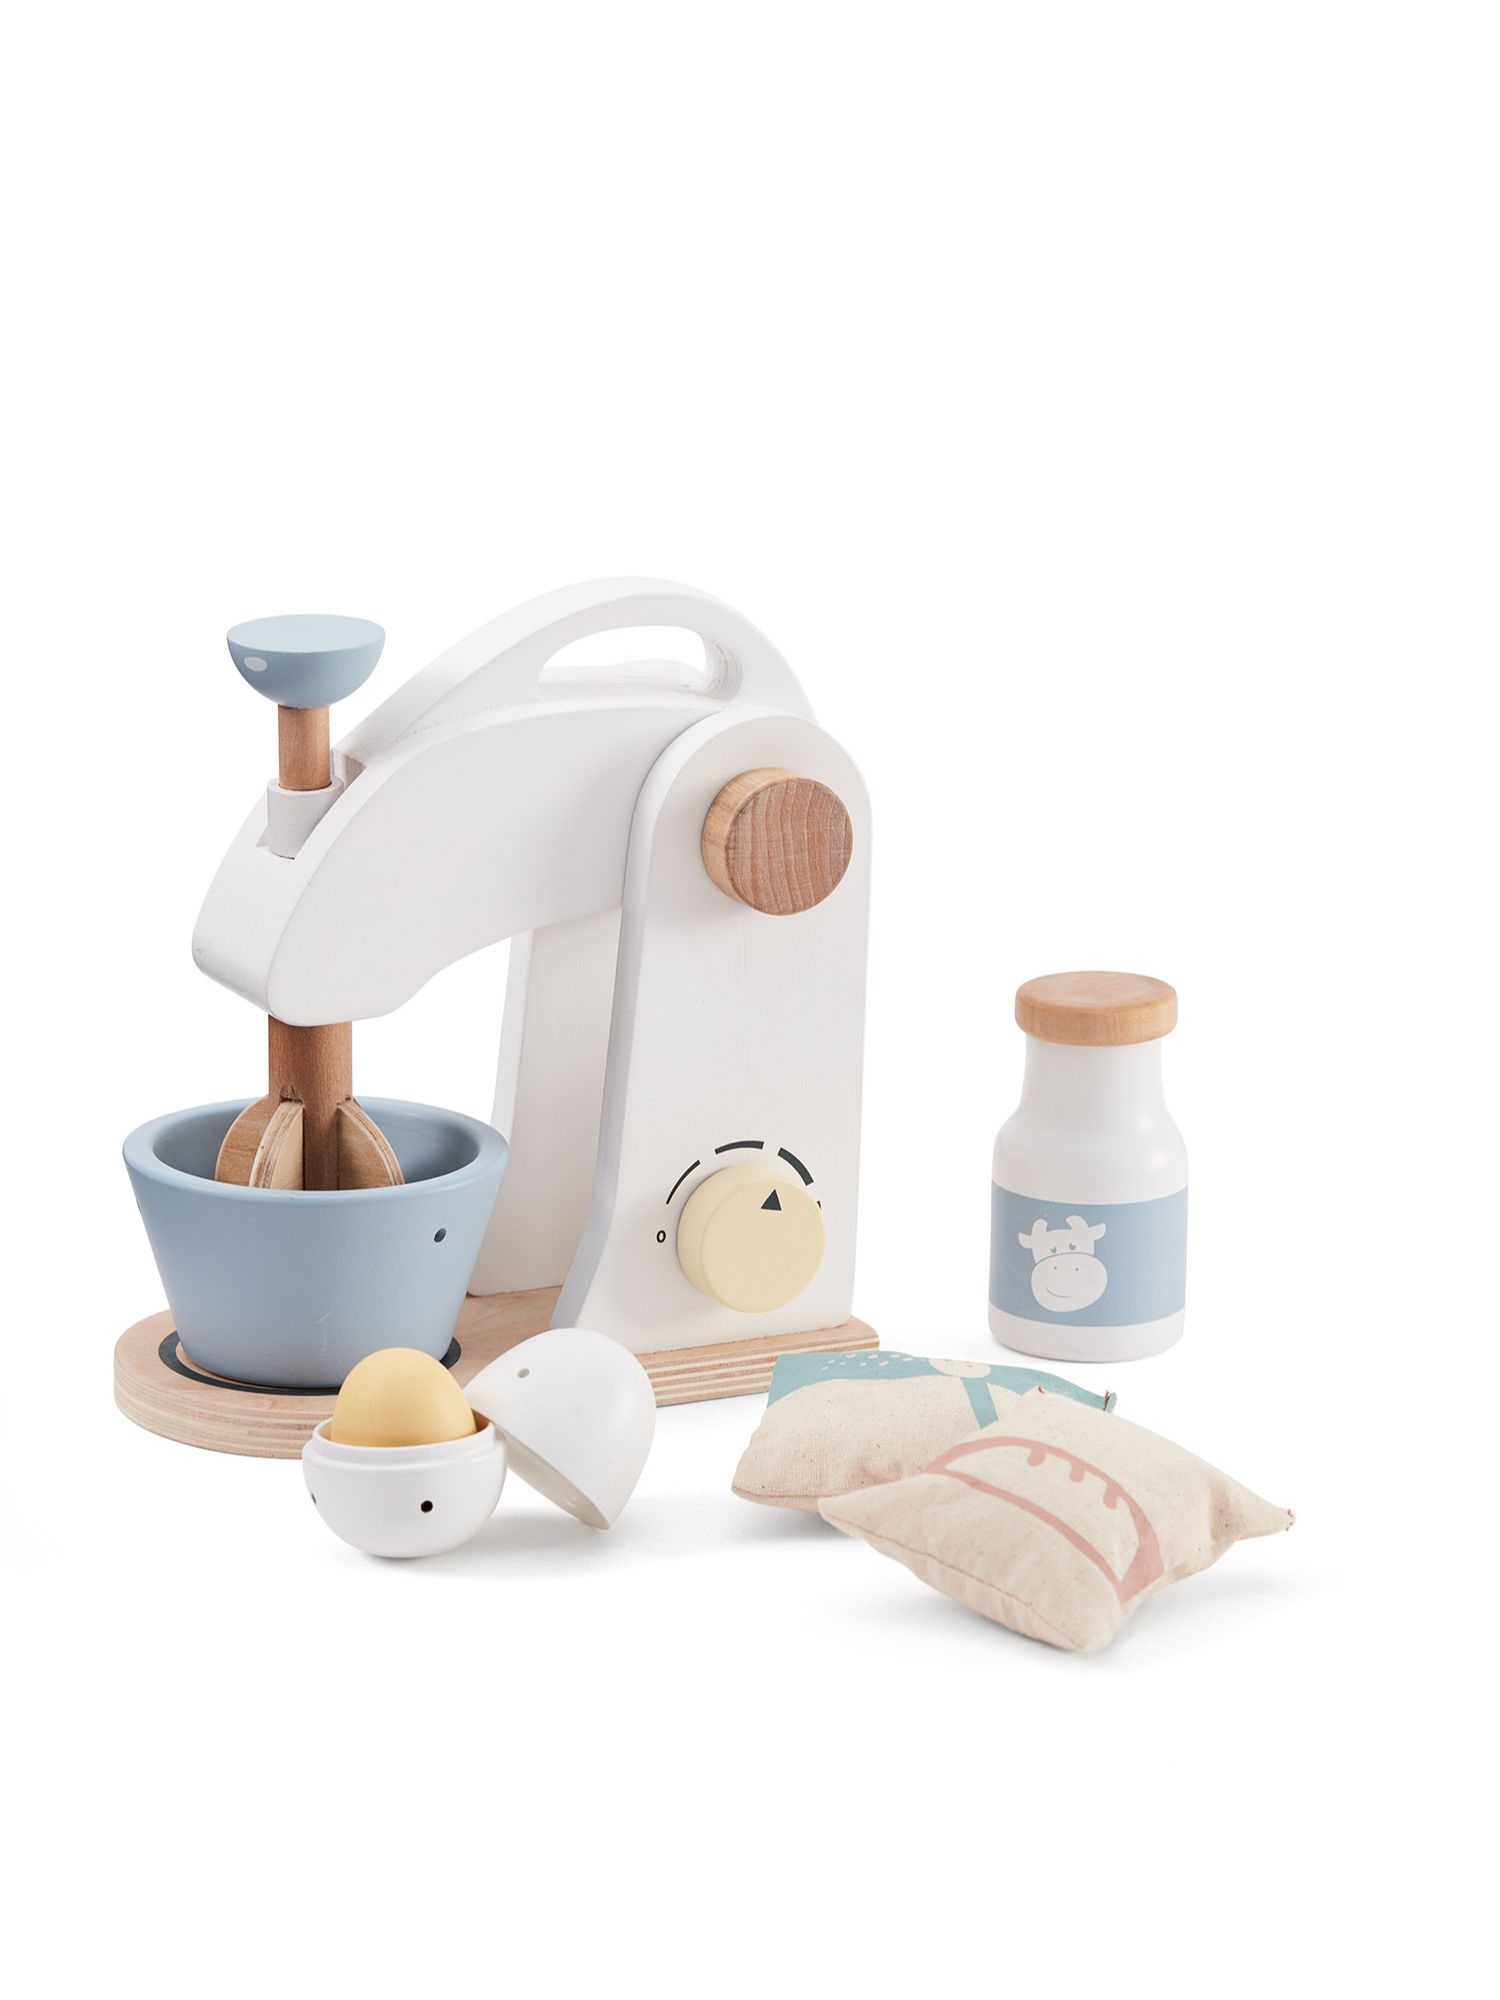 Kids' Hub kitchen mixer kit